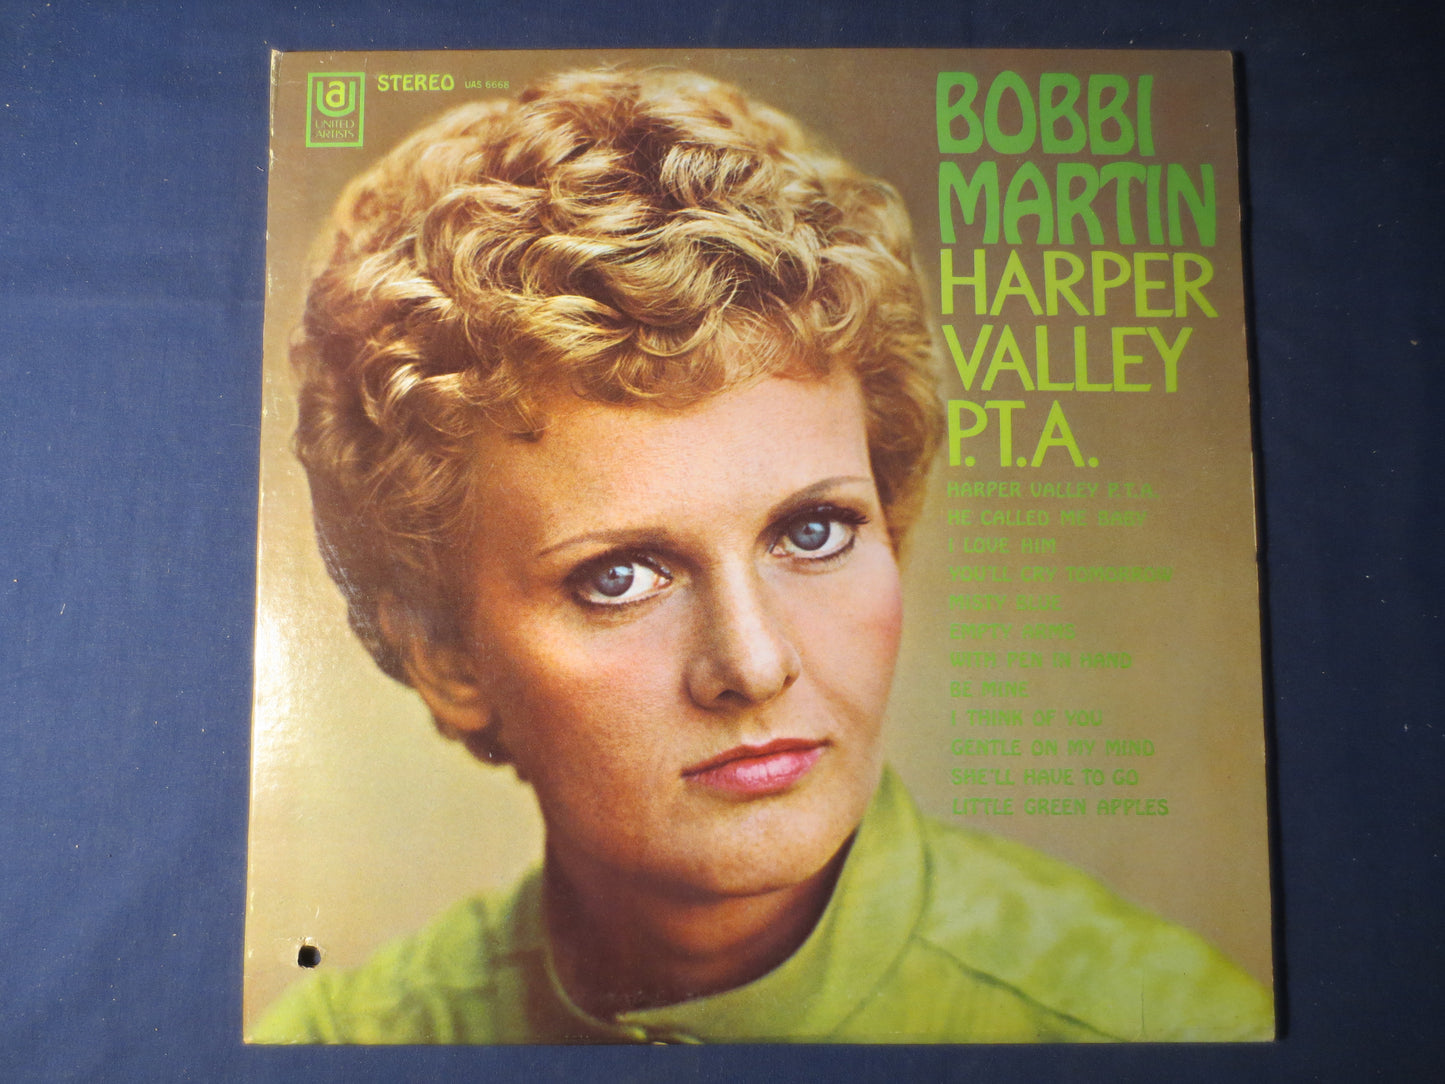 BOBBI MARTIN, Harper Valley PTA, Bobbi Martin Record, Country Record, Bobbi Martin Album, Bobbi Martin Lps, 1968 Records